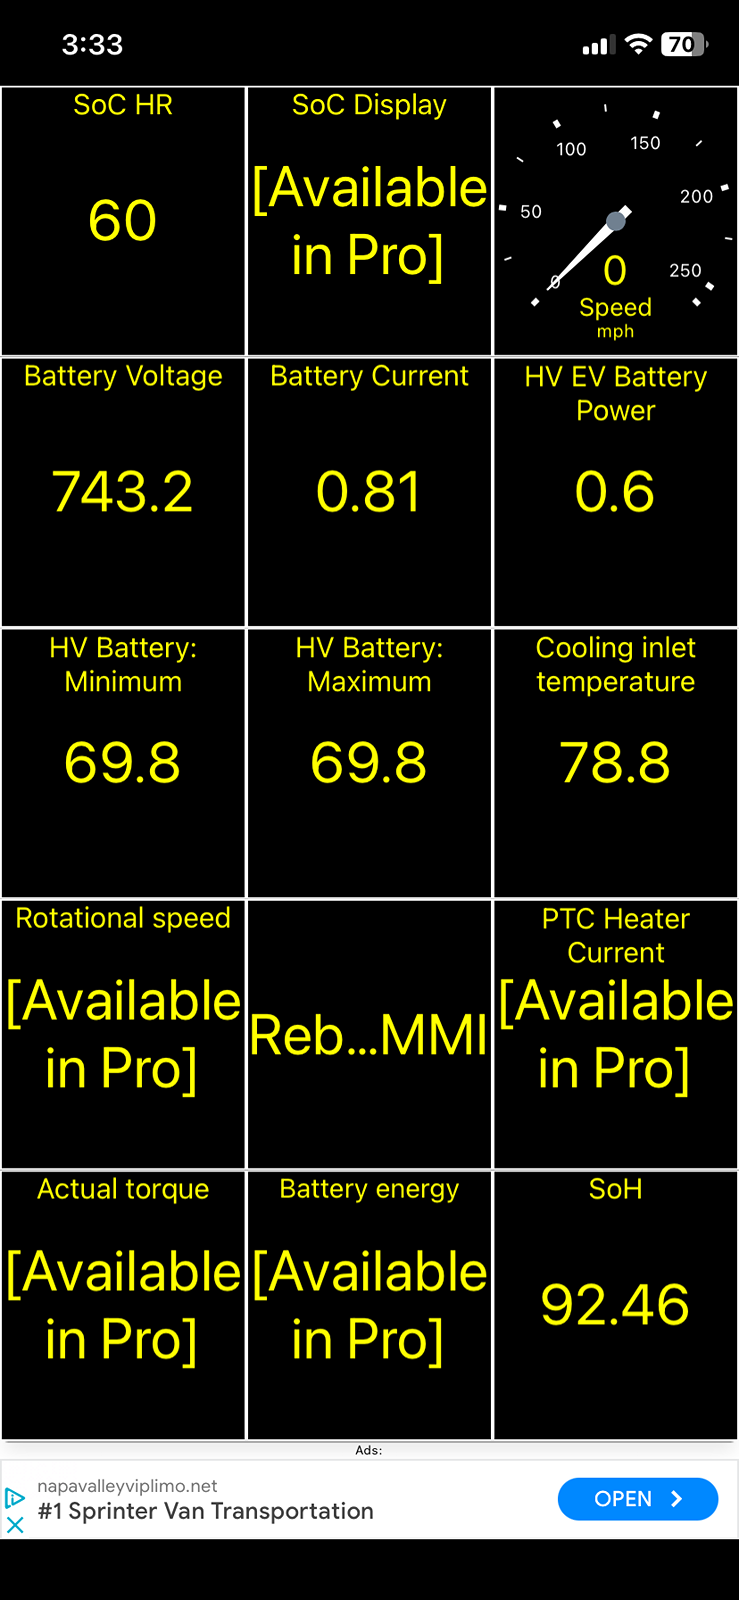 Porsche Taycan Baseline for HV Battery SoH Performance IMG_2710